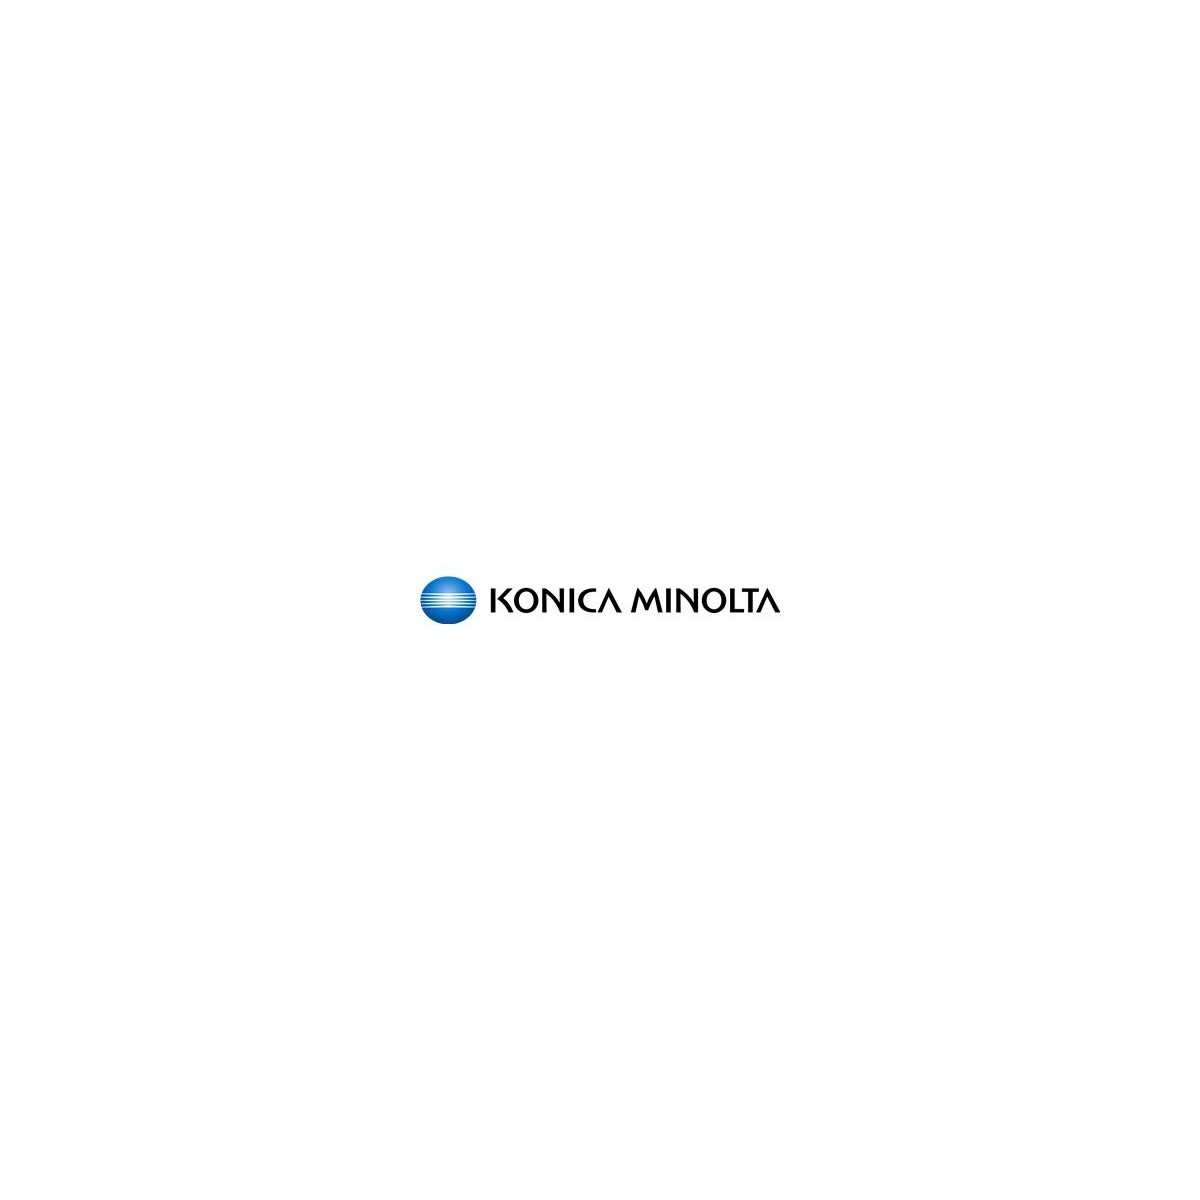 Konica Minolta 1710552-001 - Konica Minolta magicolor 3300 / 3100 - Laser - 5 - 35 °C - 10 - 80% - 30000 pages